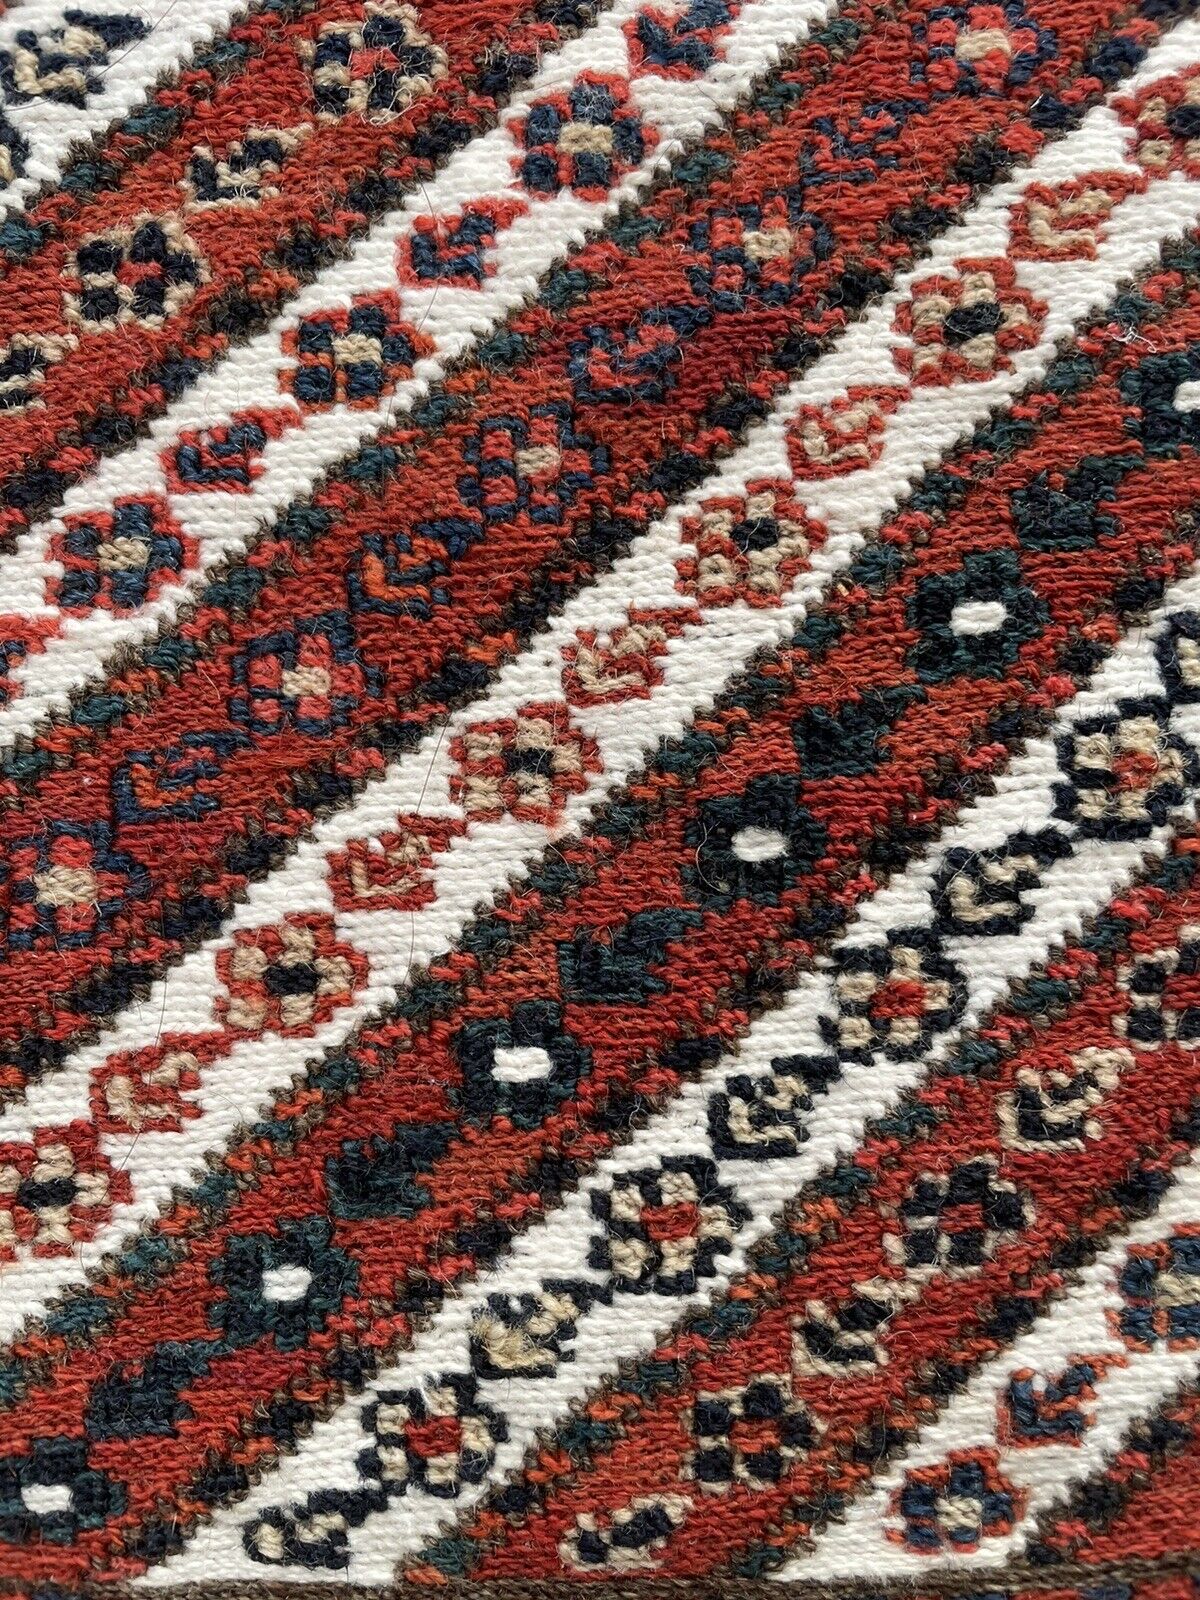 Close-up of geometric motifs on Handmade Vintage Persian Kurdish Salt Bag - Detailed view showcasing the detailed geometric motifs woven into the diagonal stripes of the bag.